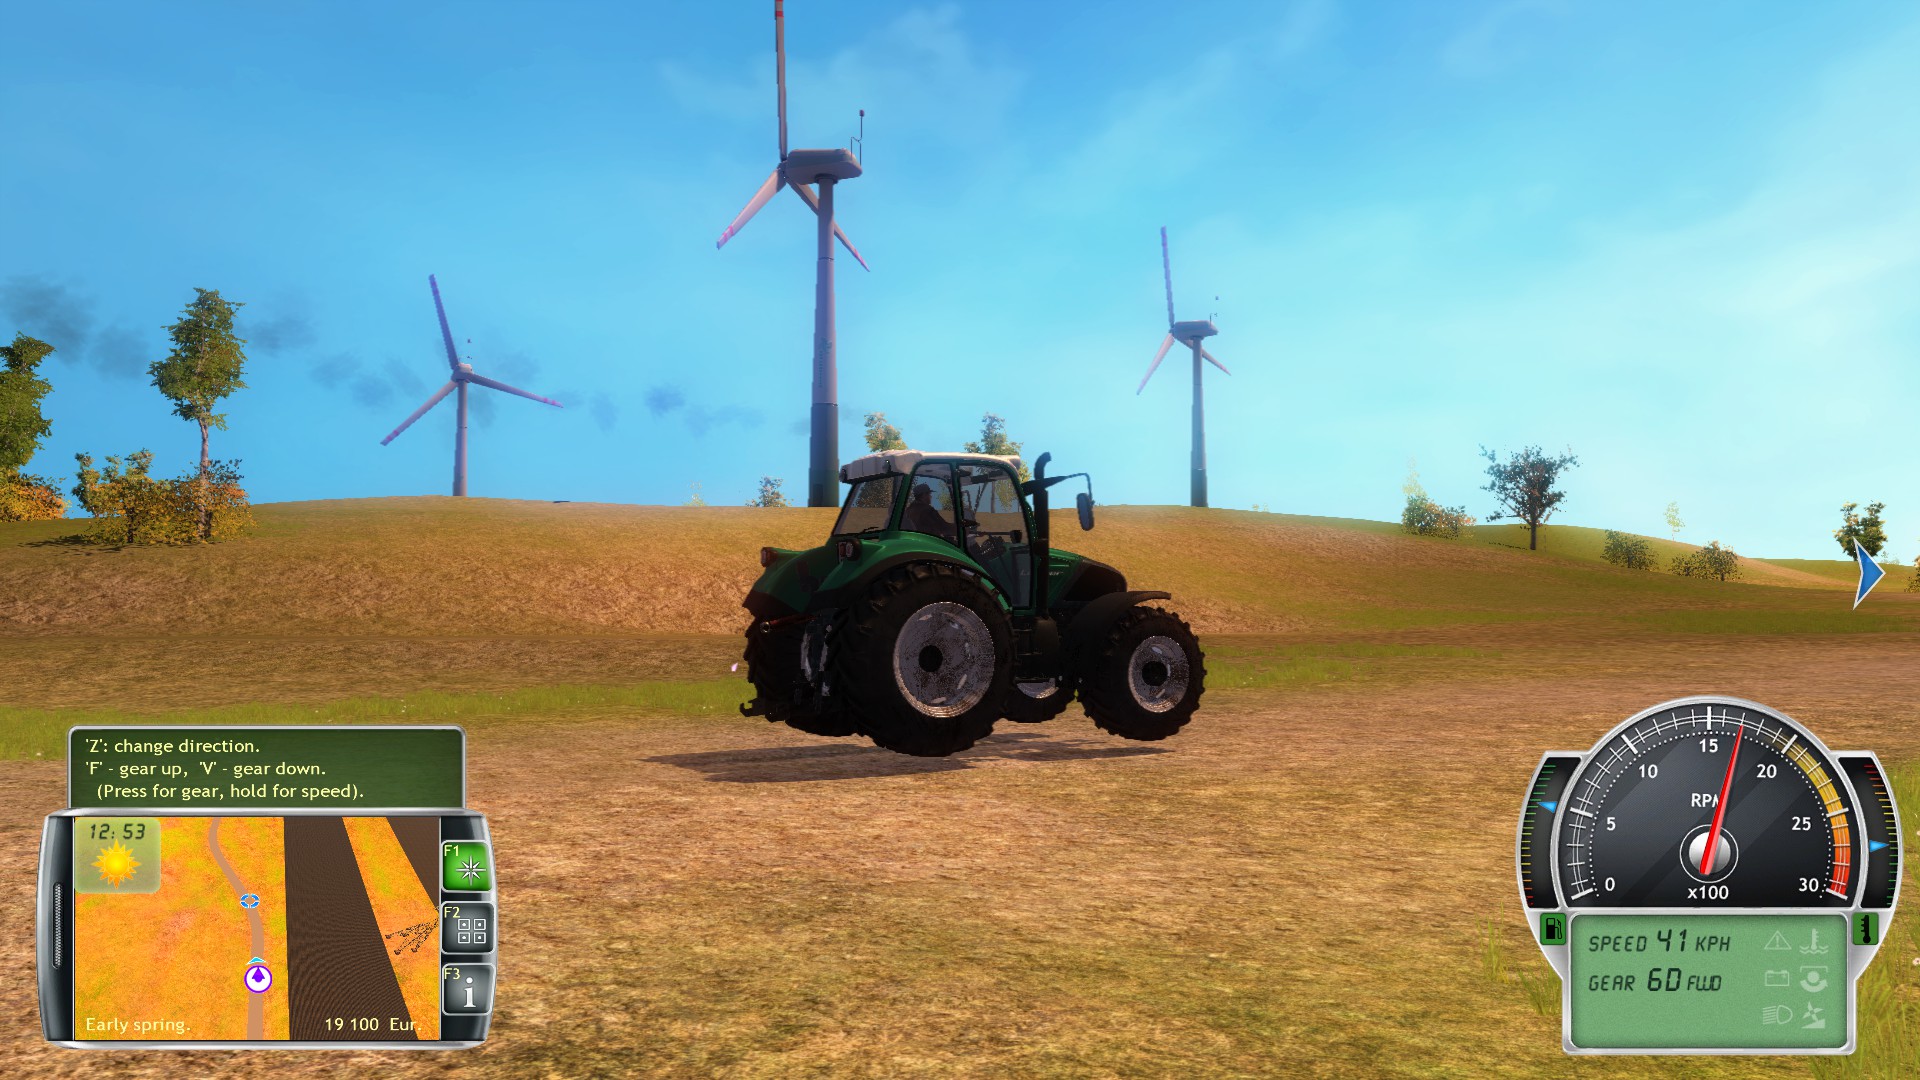 Review Farming Simulator 14